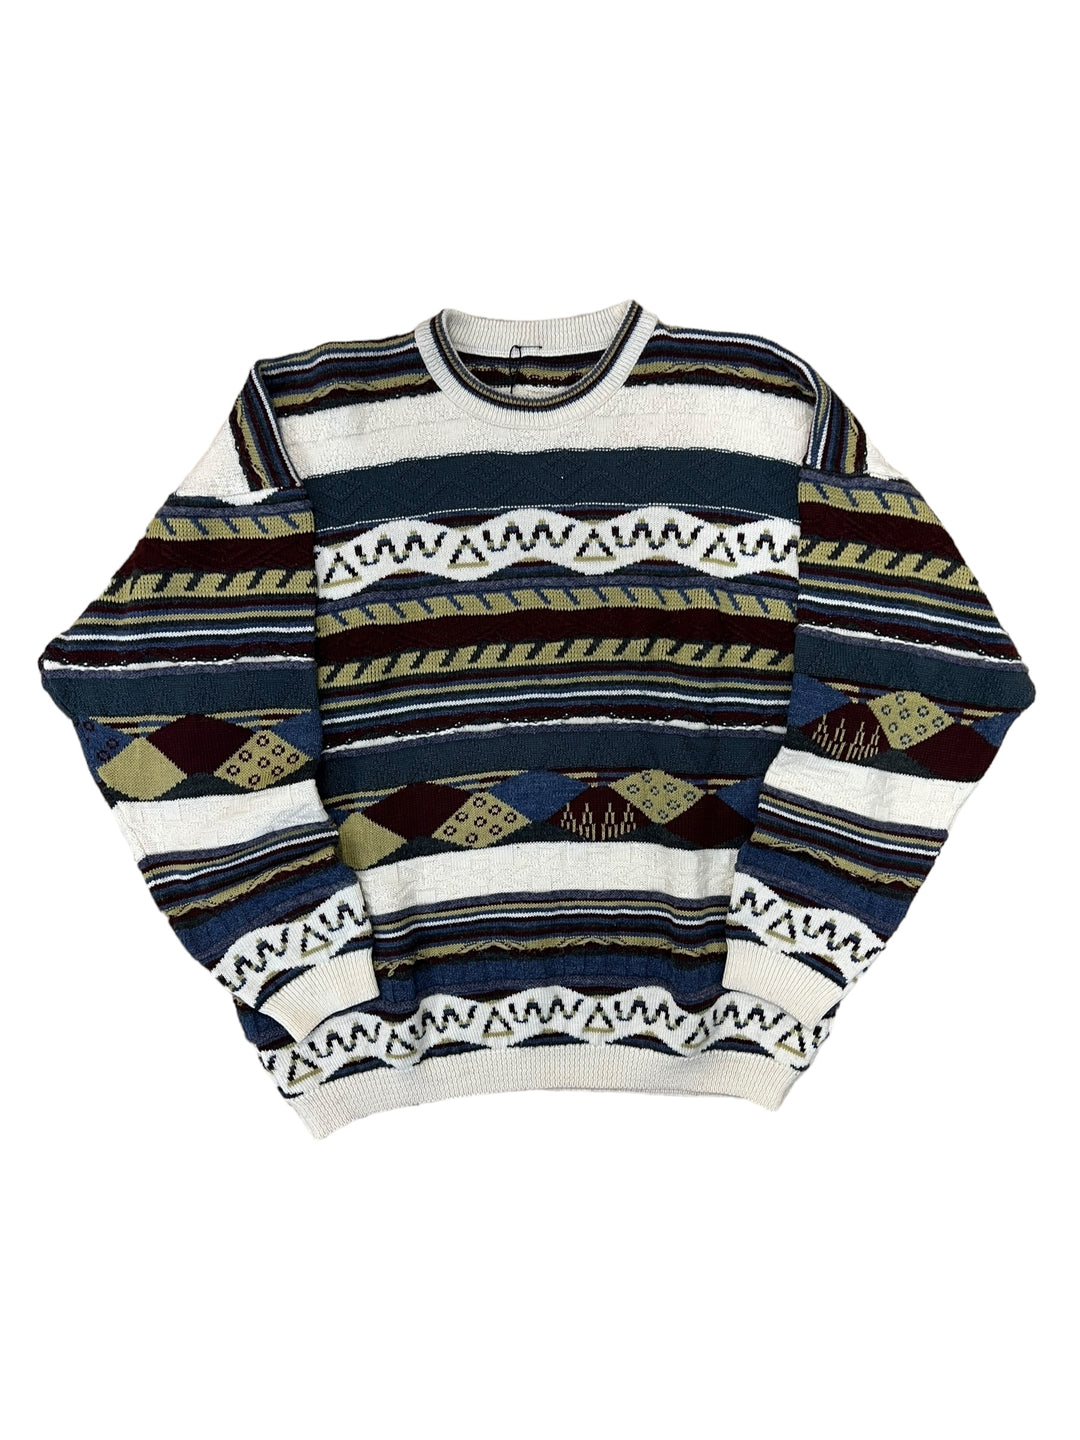 Vintage 90’s sweater men’s large